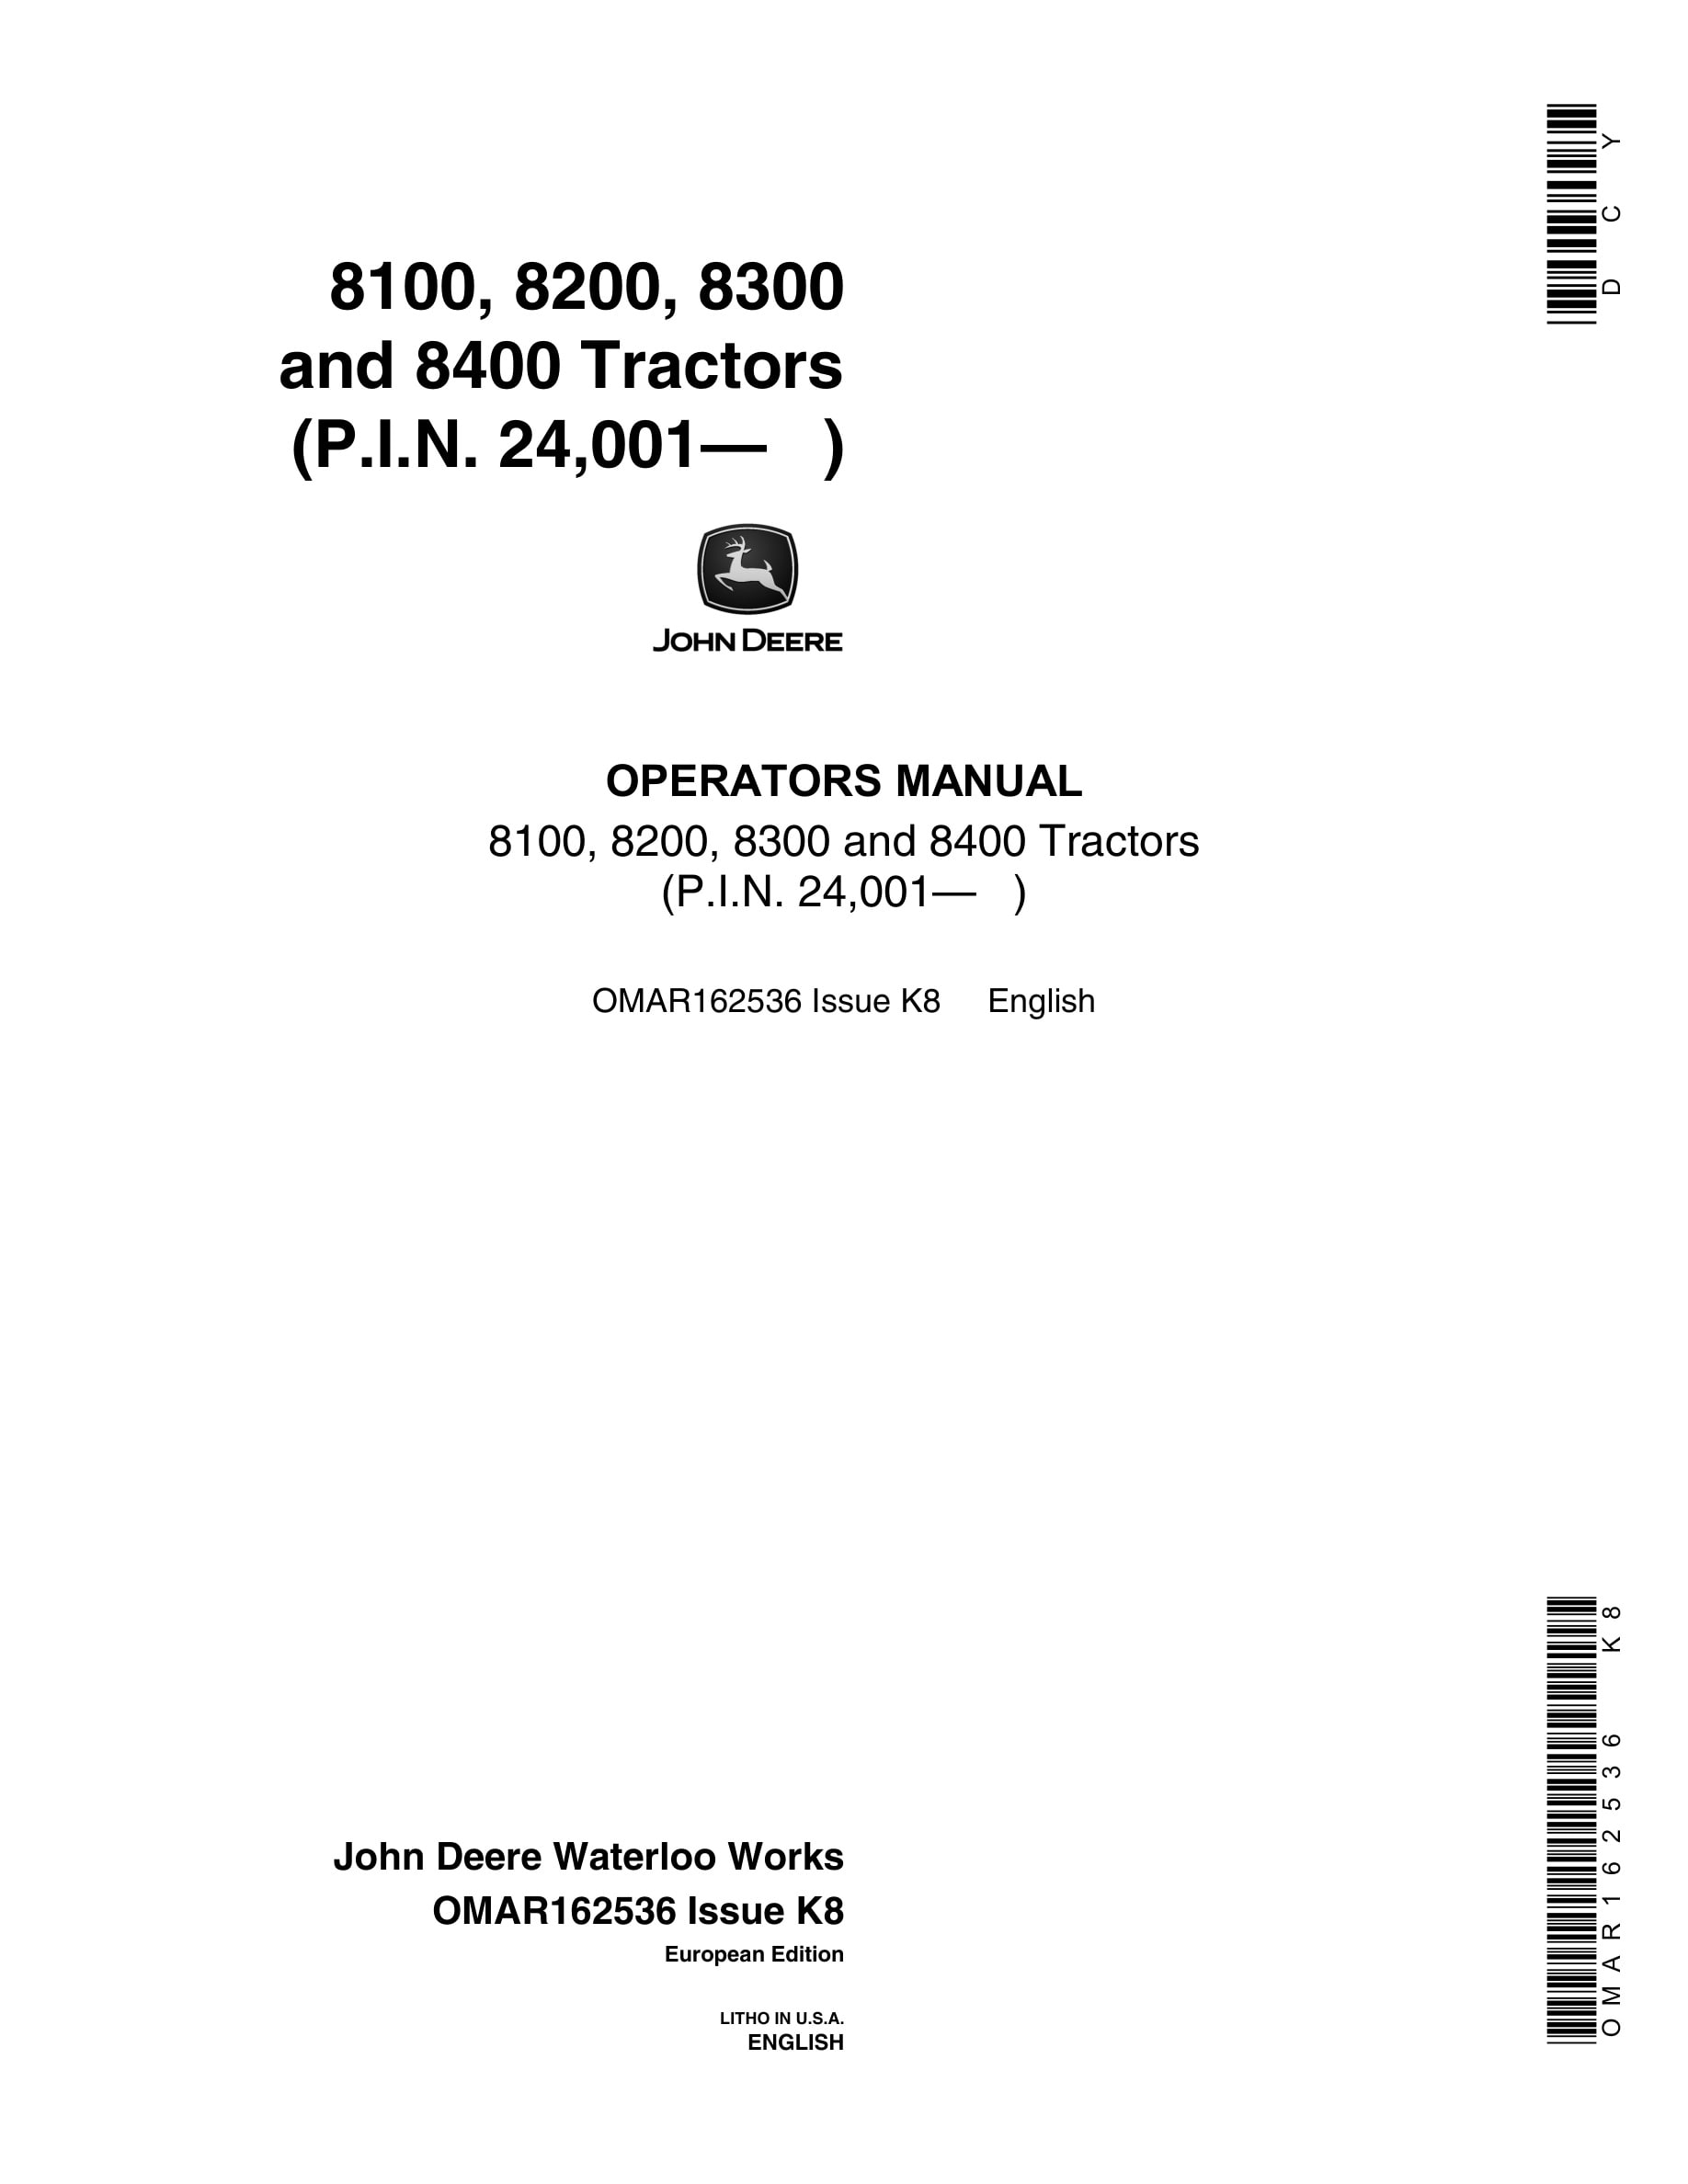 John Deere 8100, 8200, 8300 And 8400 Tractors Operator Manuals OMAR162536-1